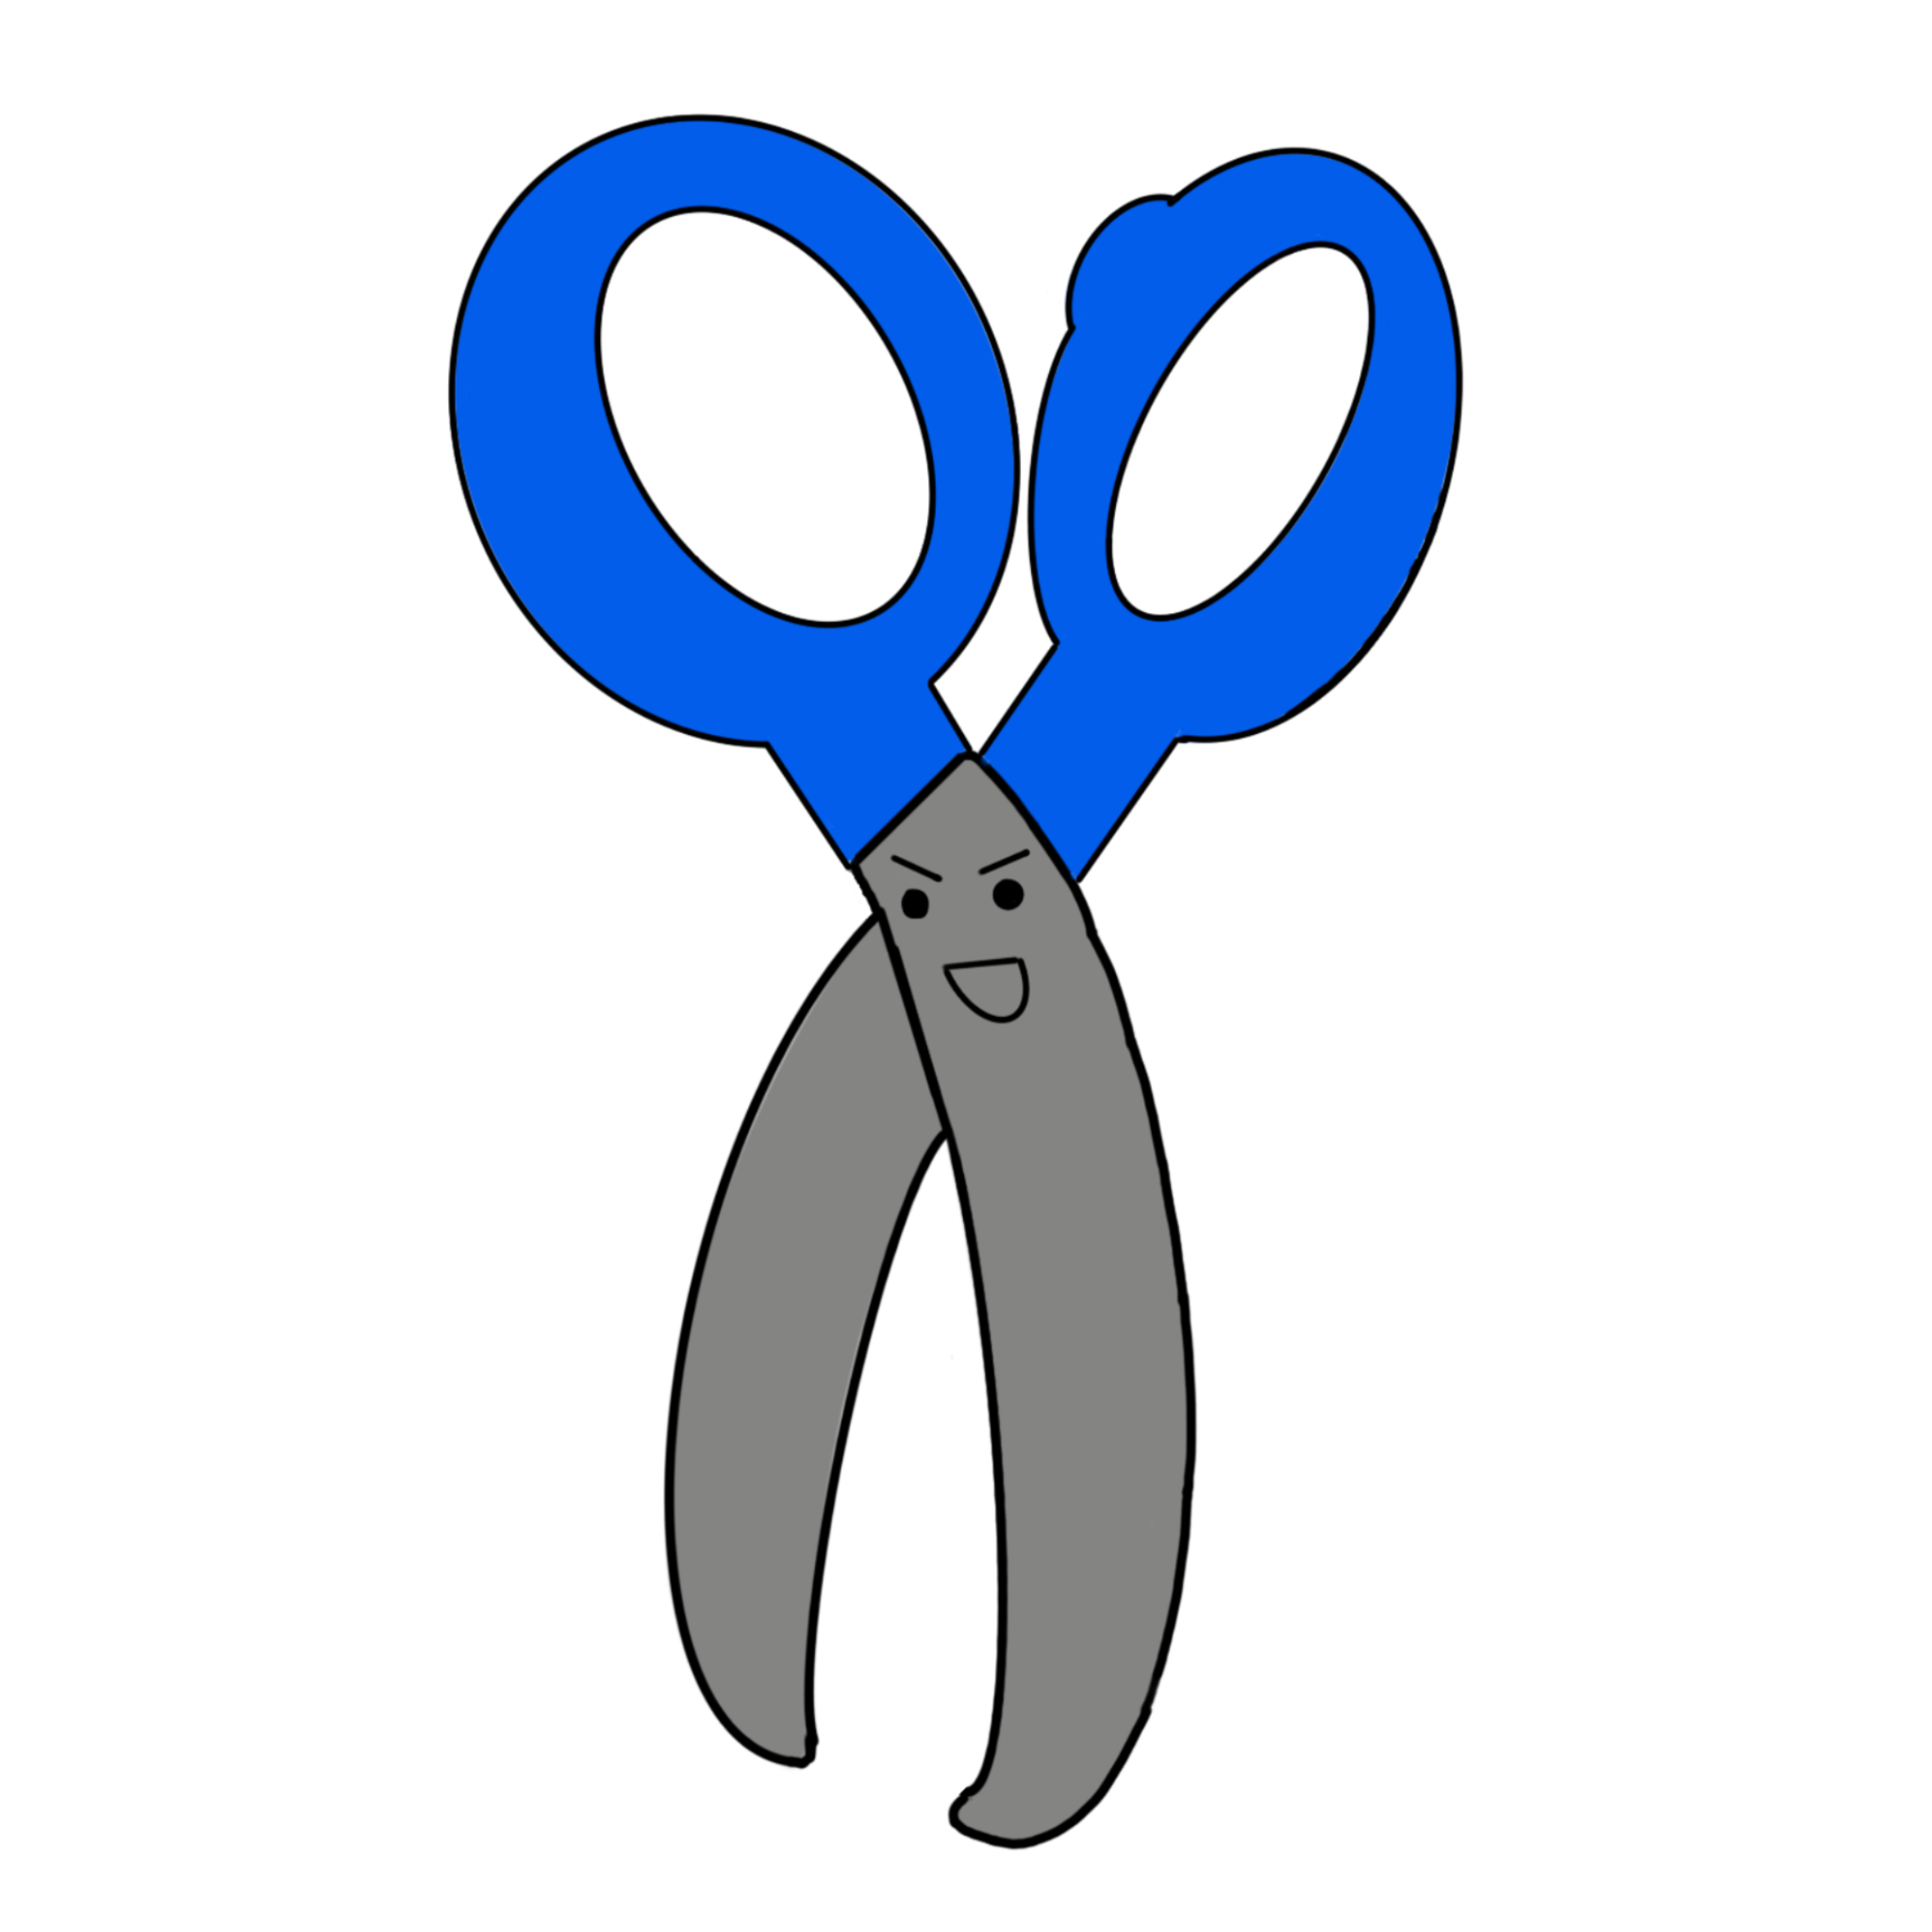 A picture of a scissors